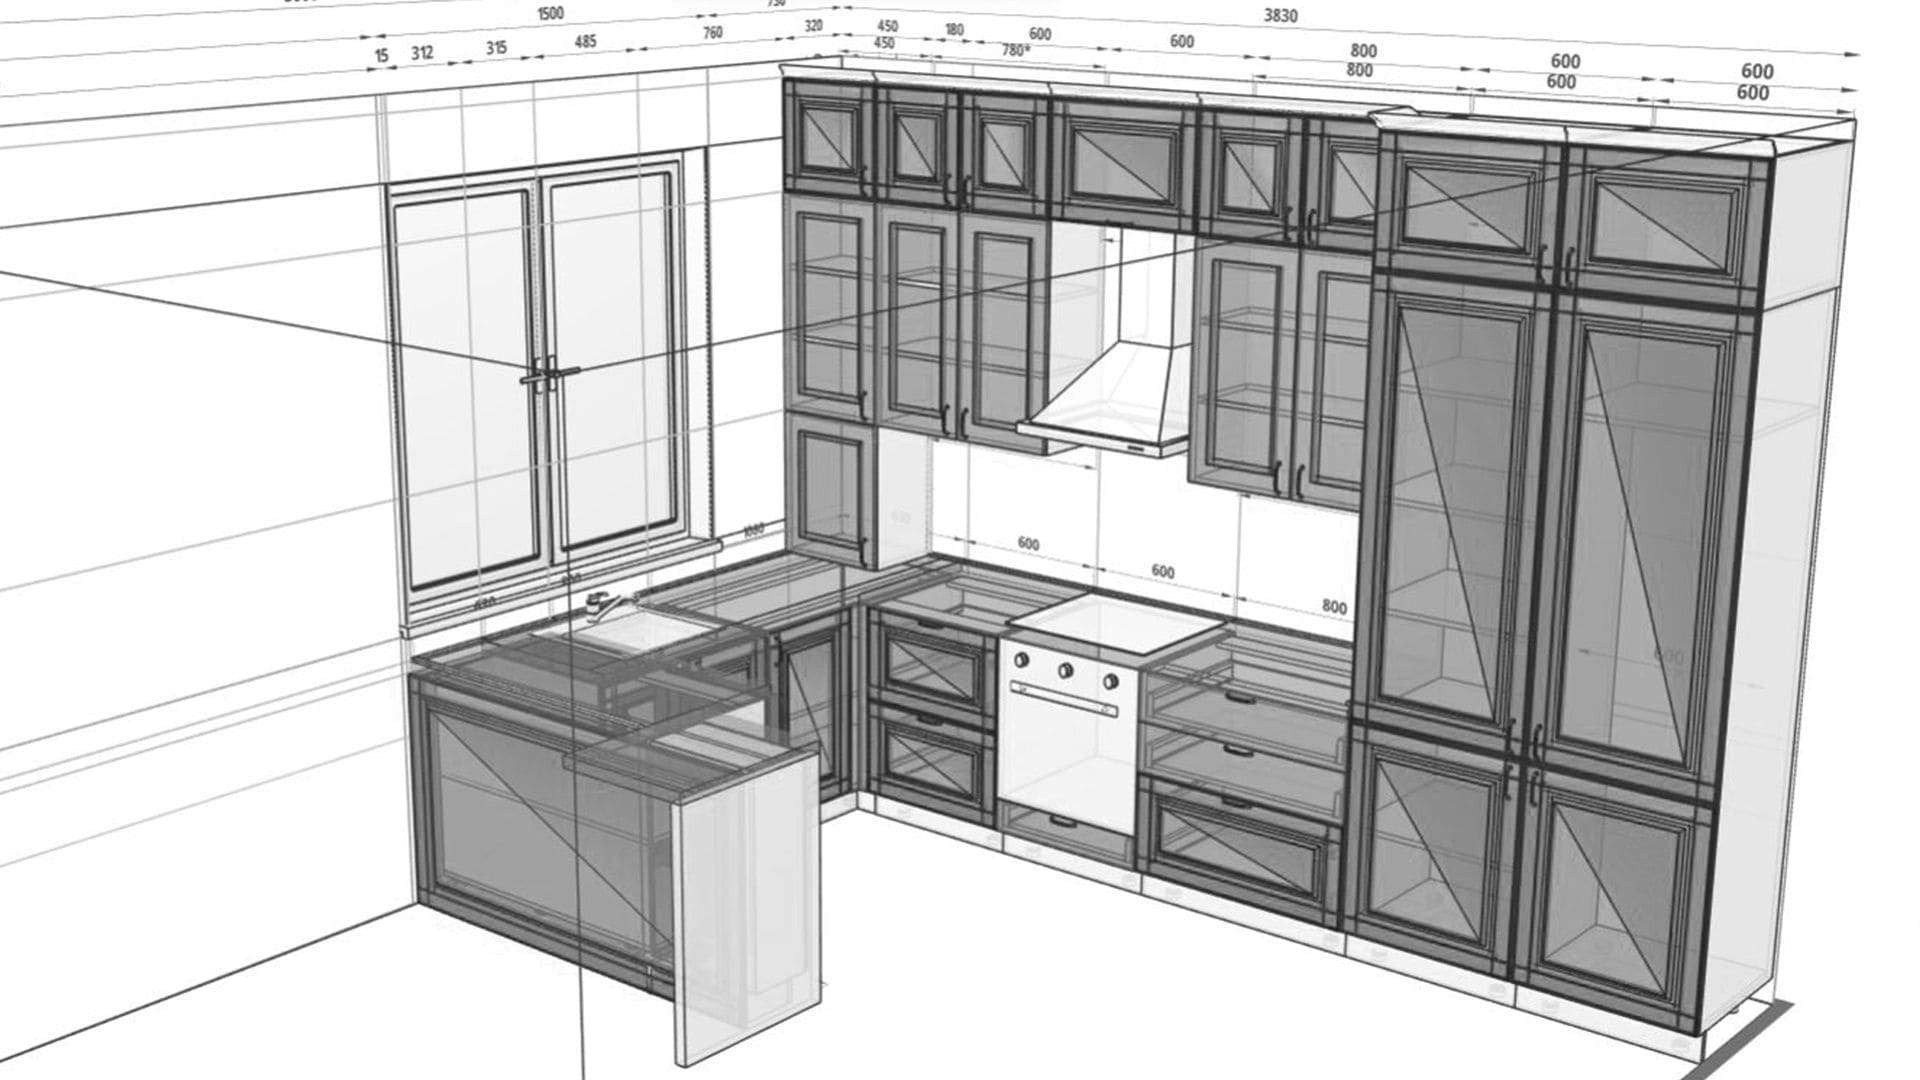 Чертеж кухни с размерами всех шкафов: изготовление мебели сво�ими руками